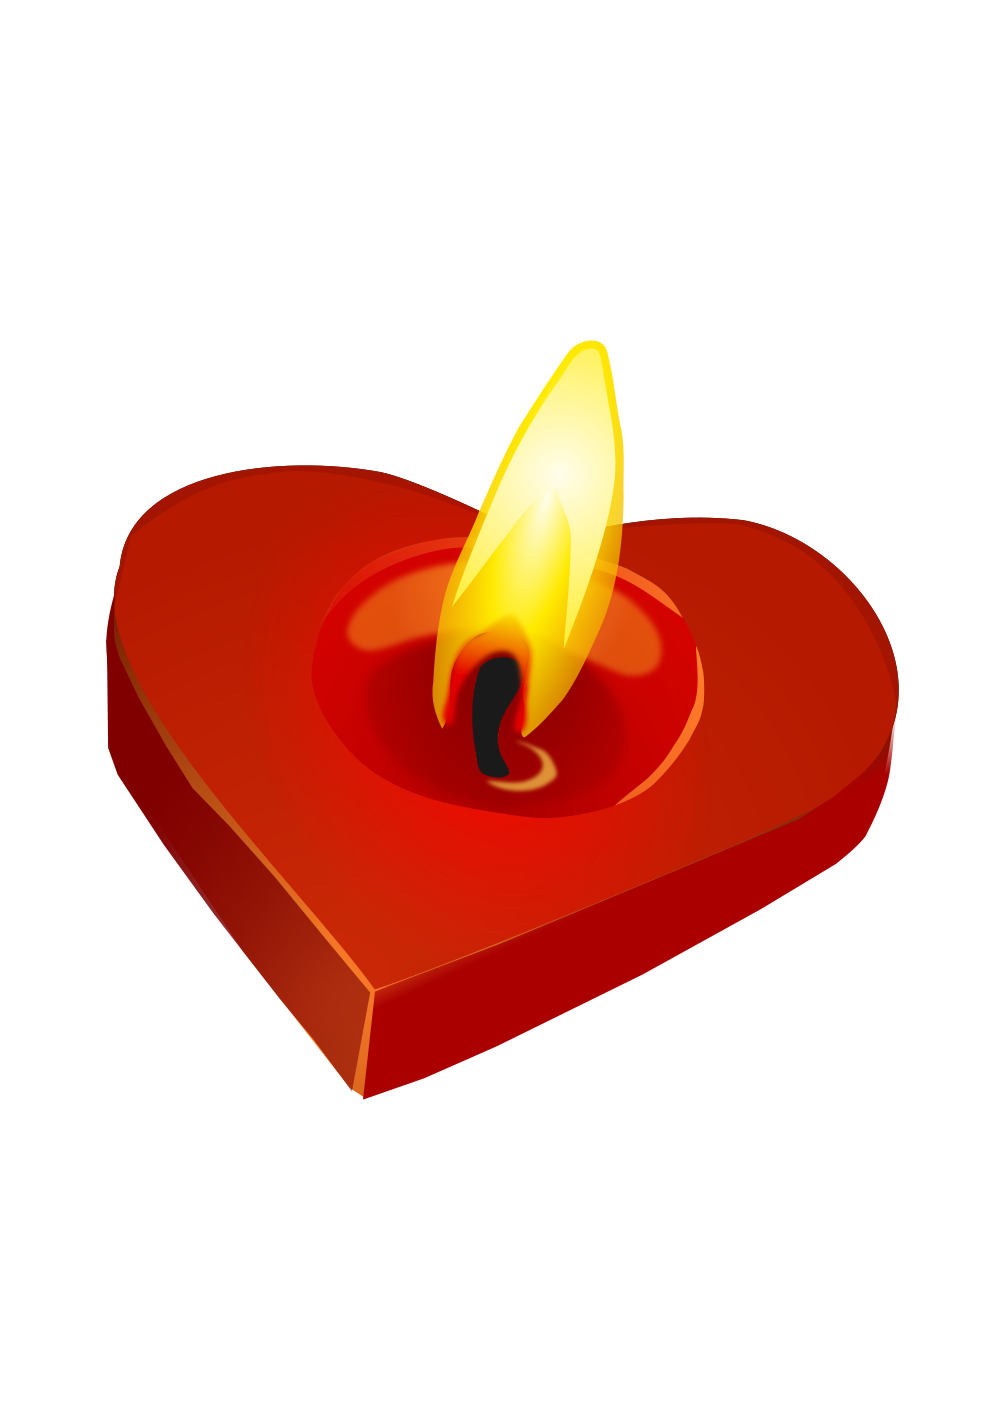 Candle valentine